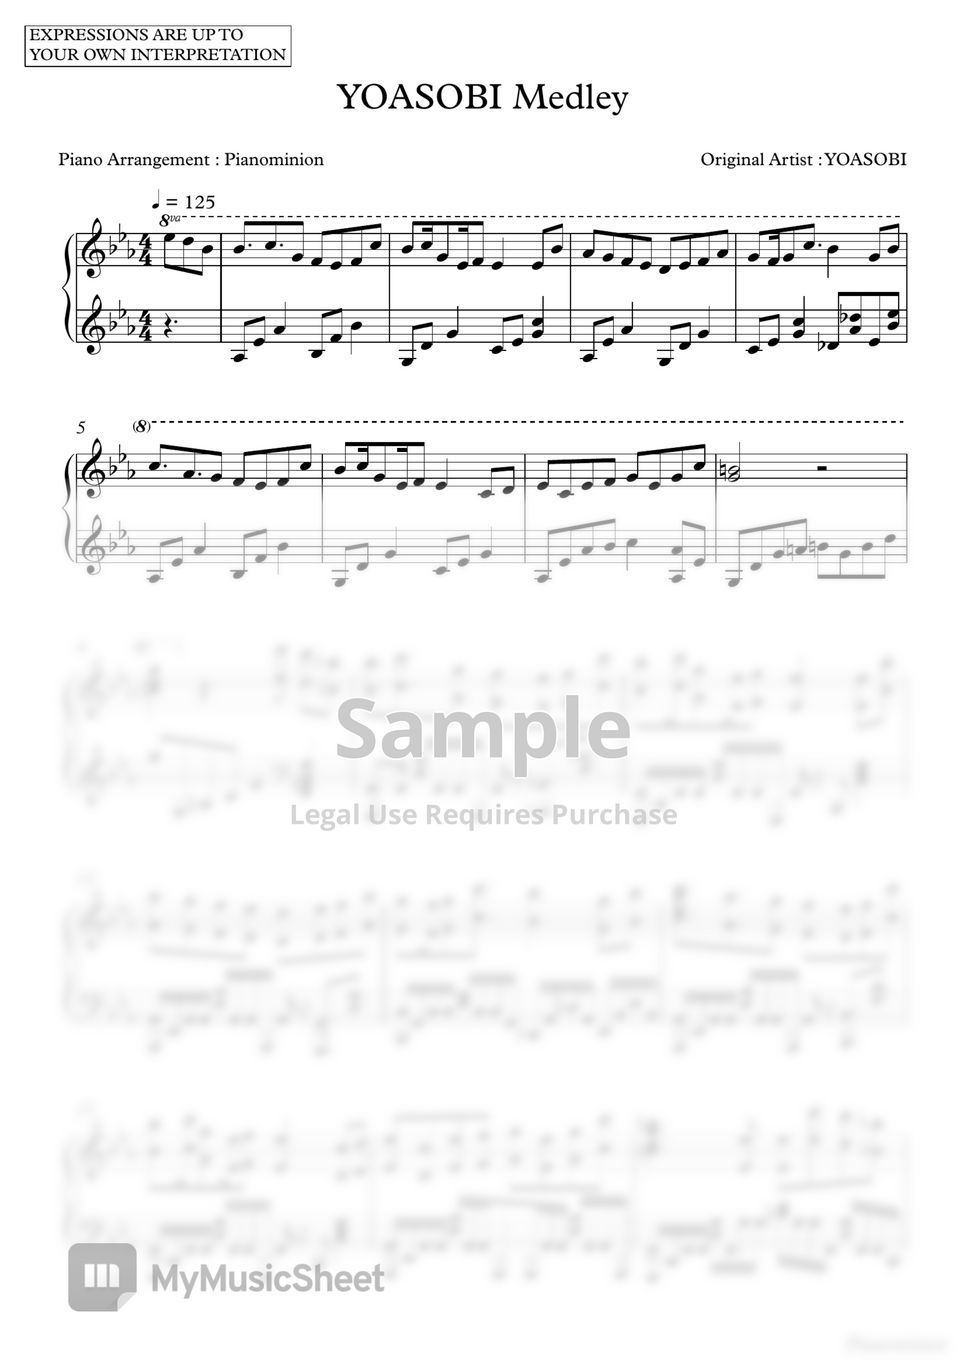 YOASOBI - YOASOBI 经典歌曲【钢琴组曲】 by Pianominion